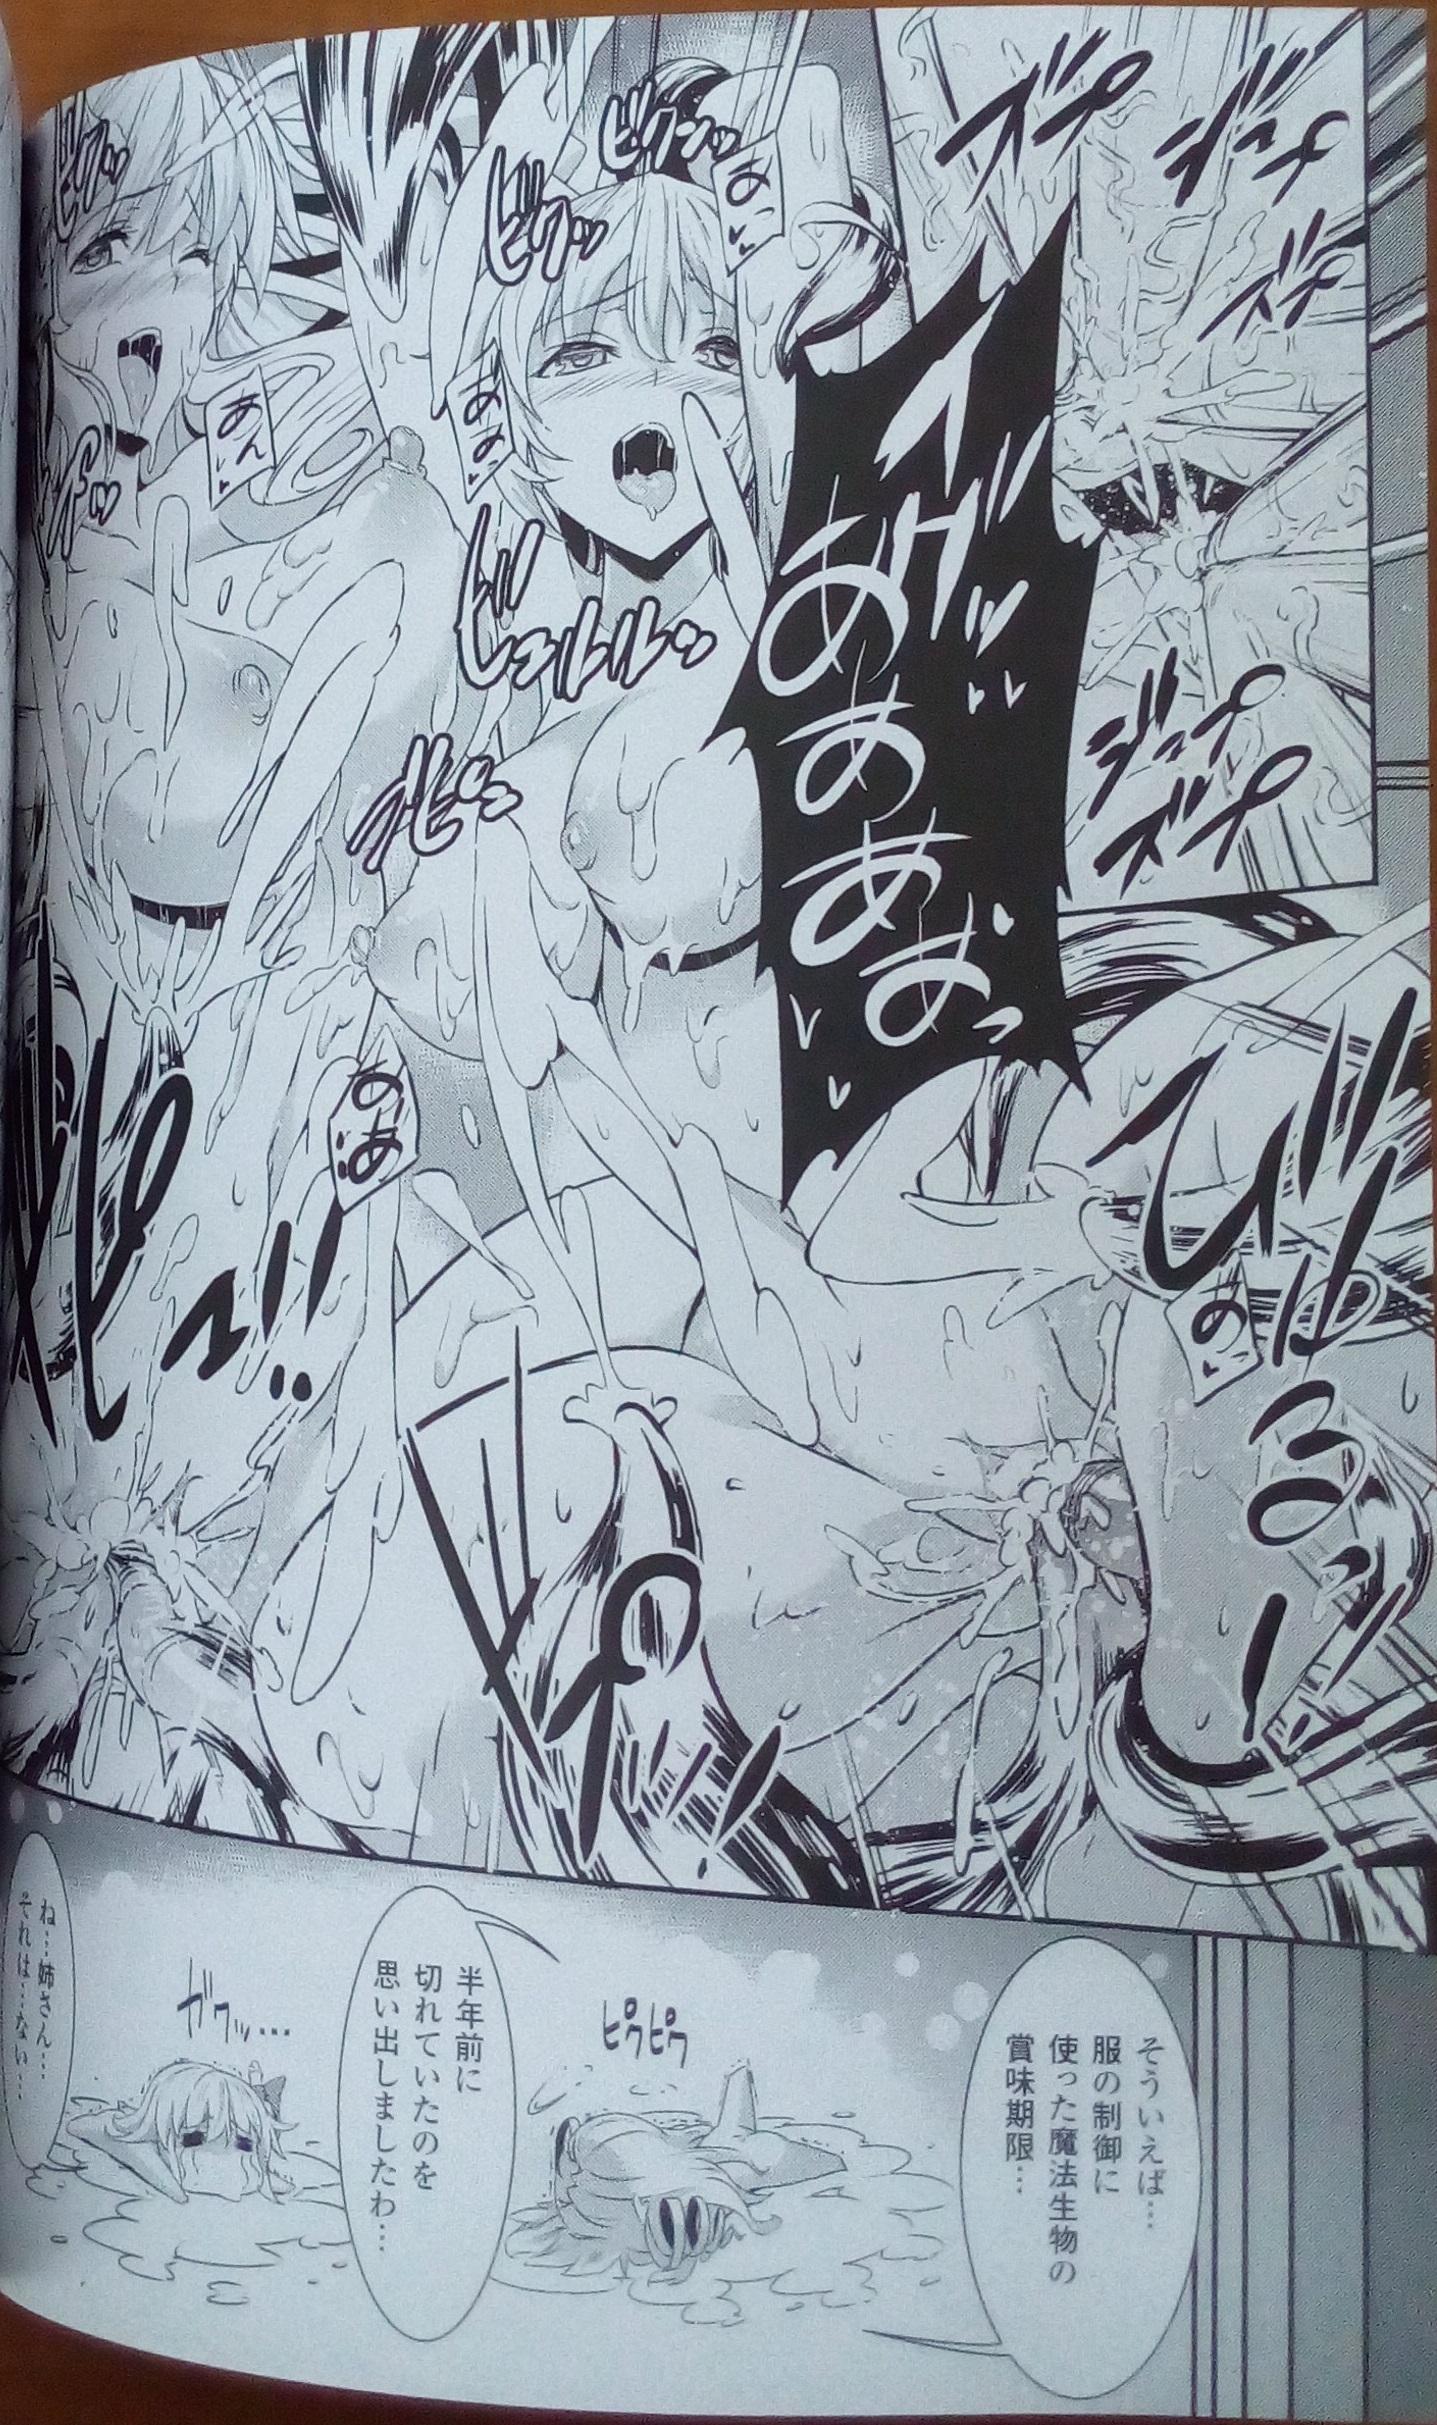 [Erect Sawaru] Shinkyoku no Grimoire III -PANDRA saga 2nd story-  Append book [Photoed] 10